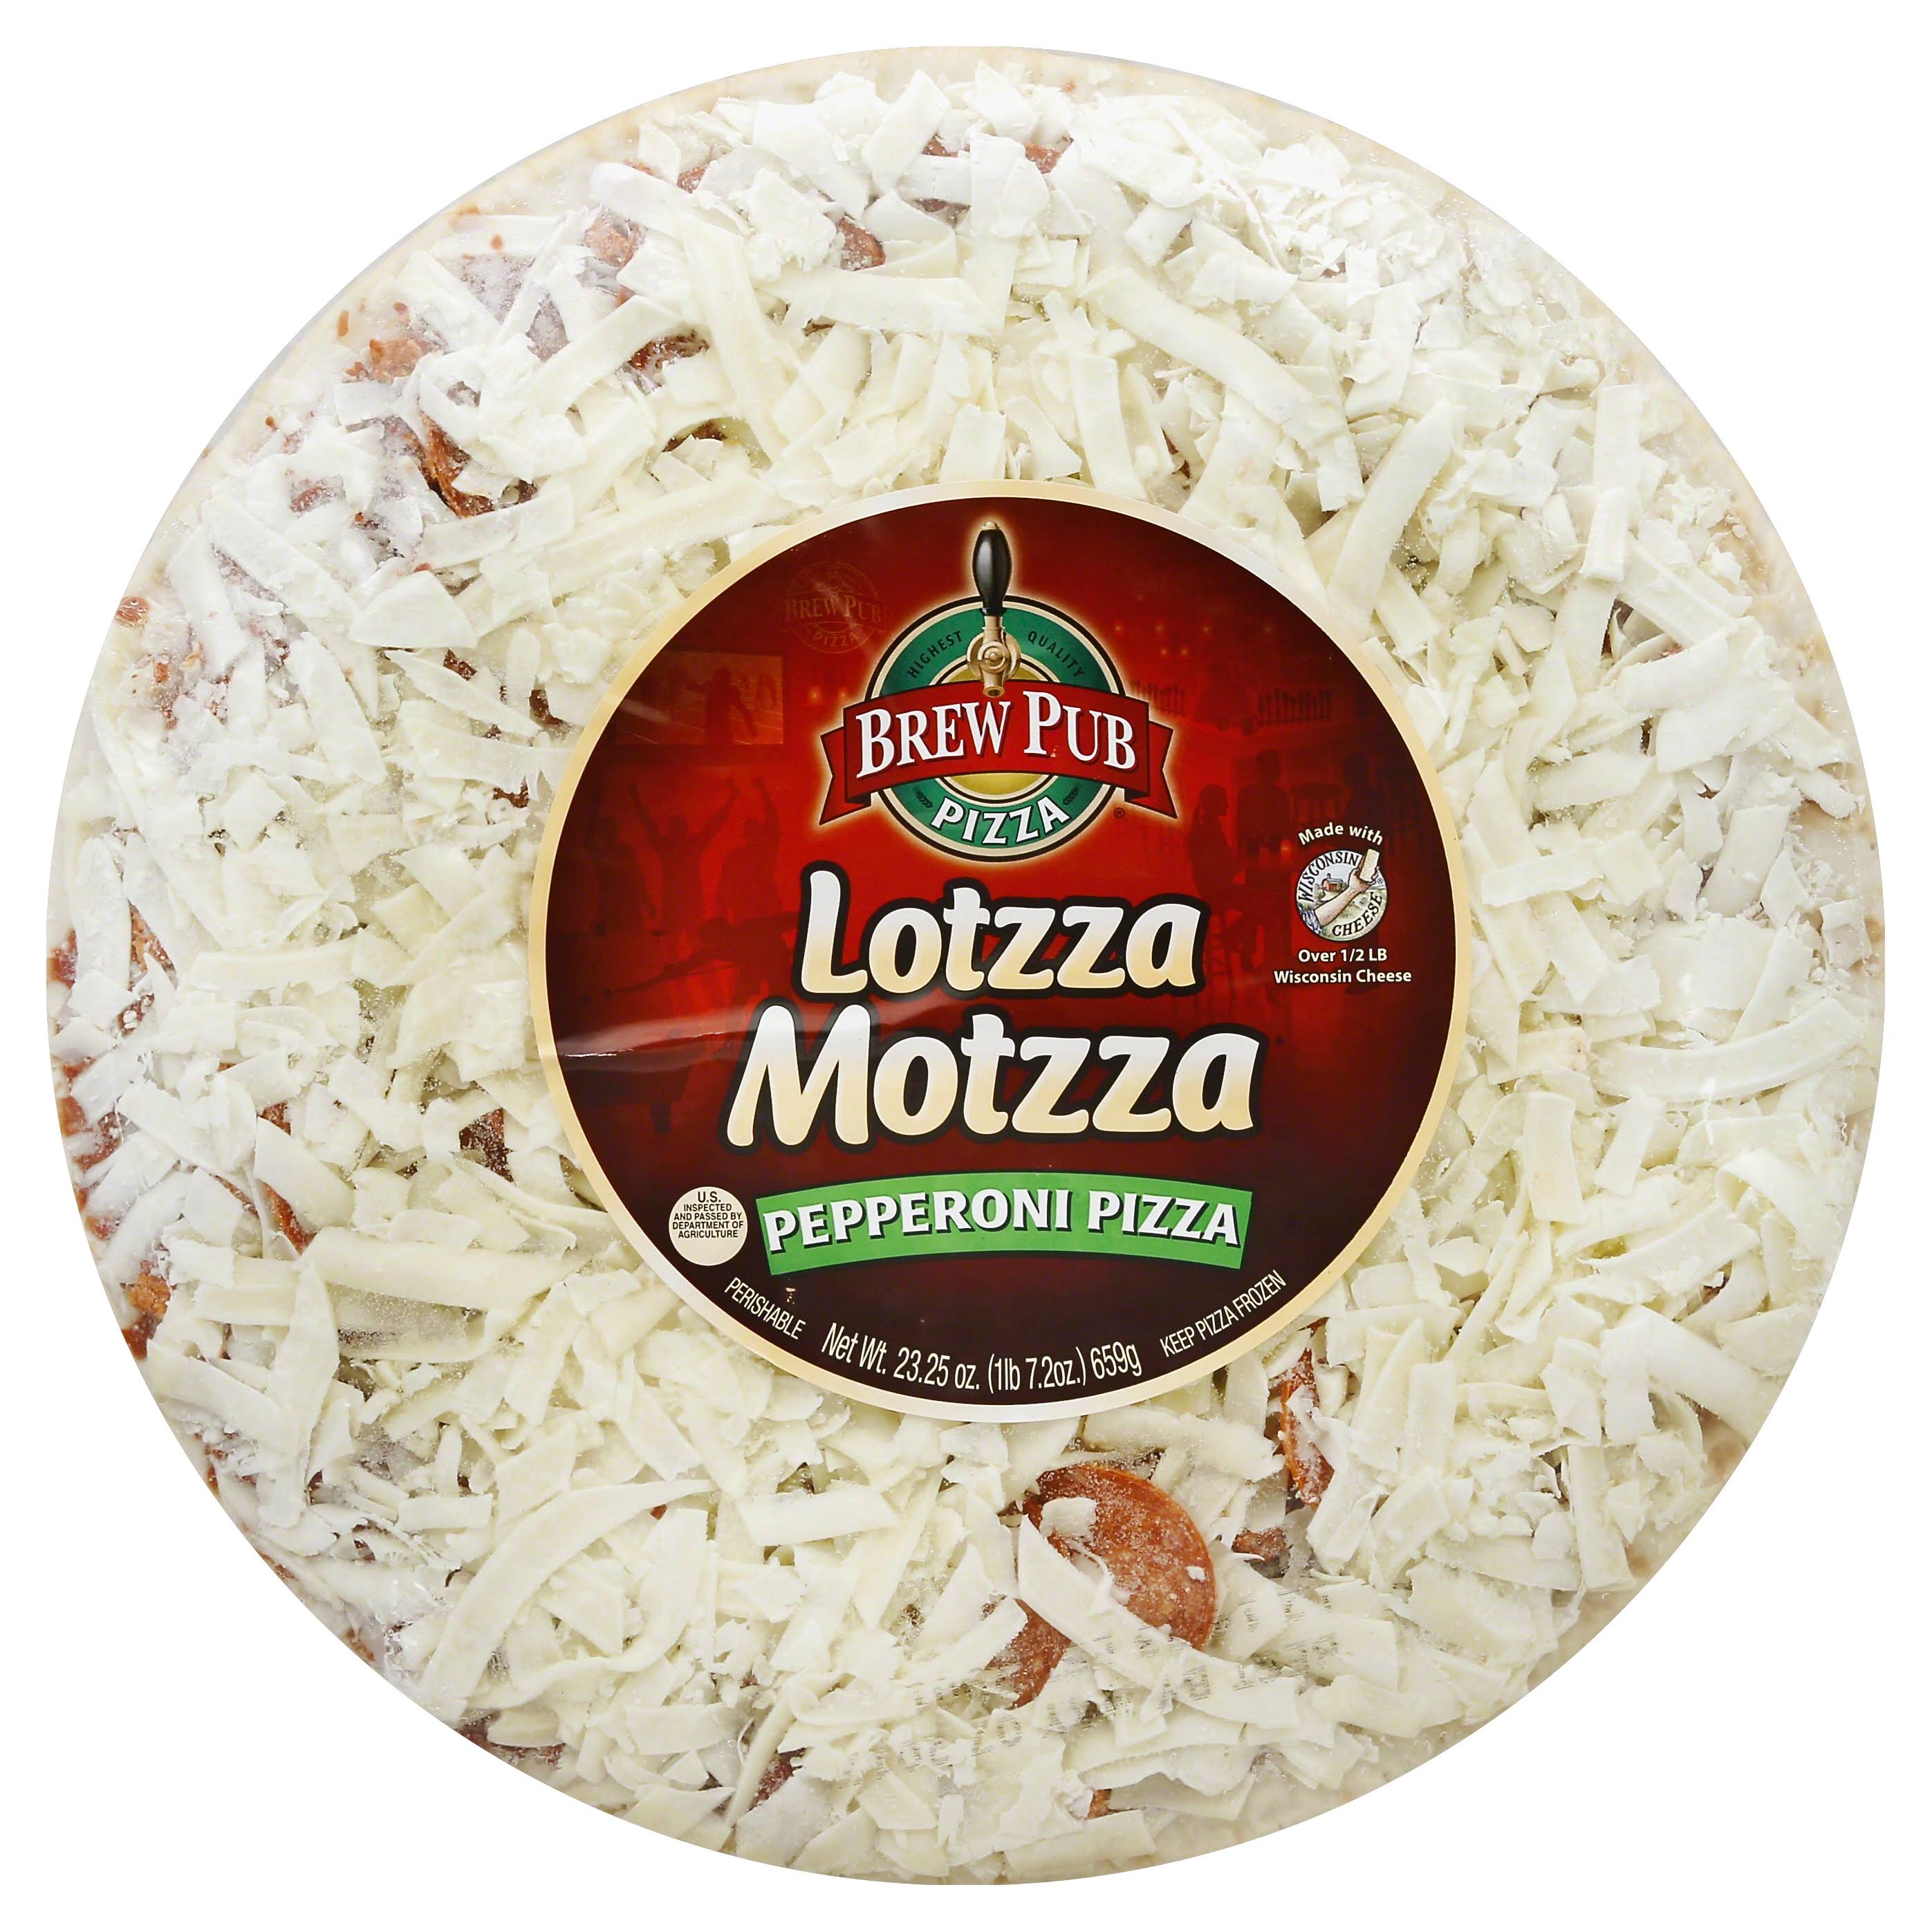 Brew Pub Lotzza Motzza Pizza, Pepperoni, 12 Inch - 23.25 oz